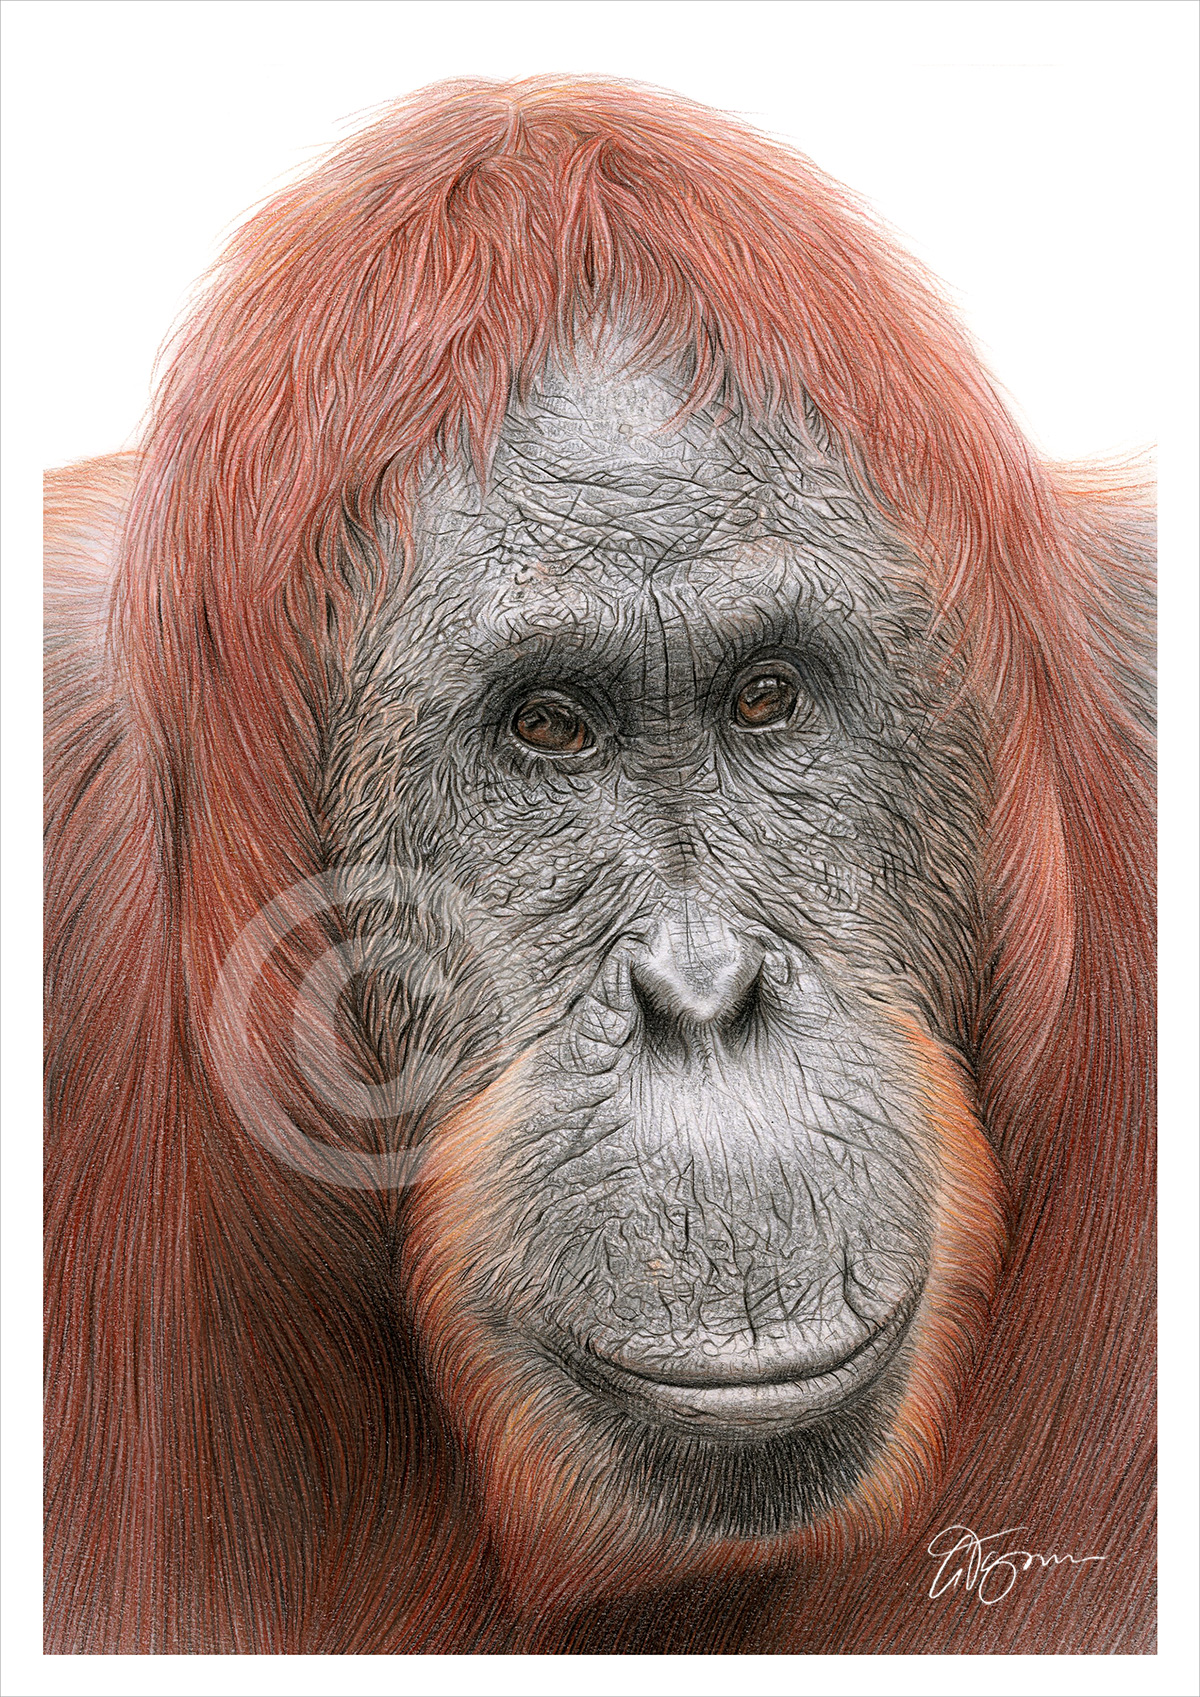 Colour pencil drawing of an orangutan by artist Gary Tymon